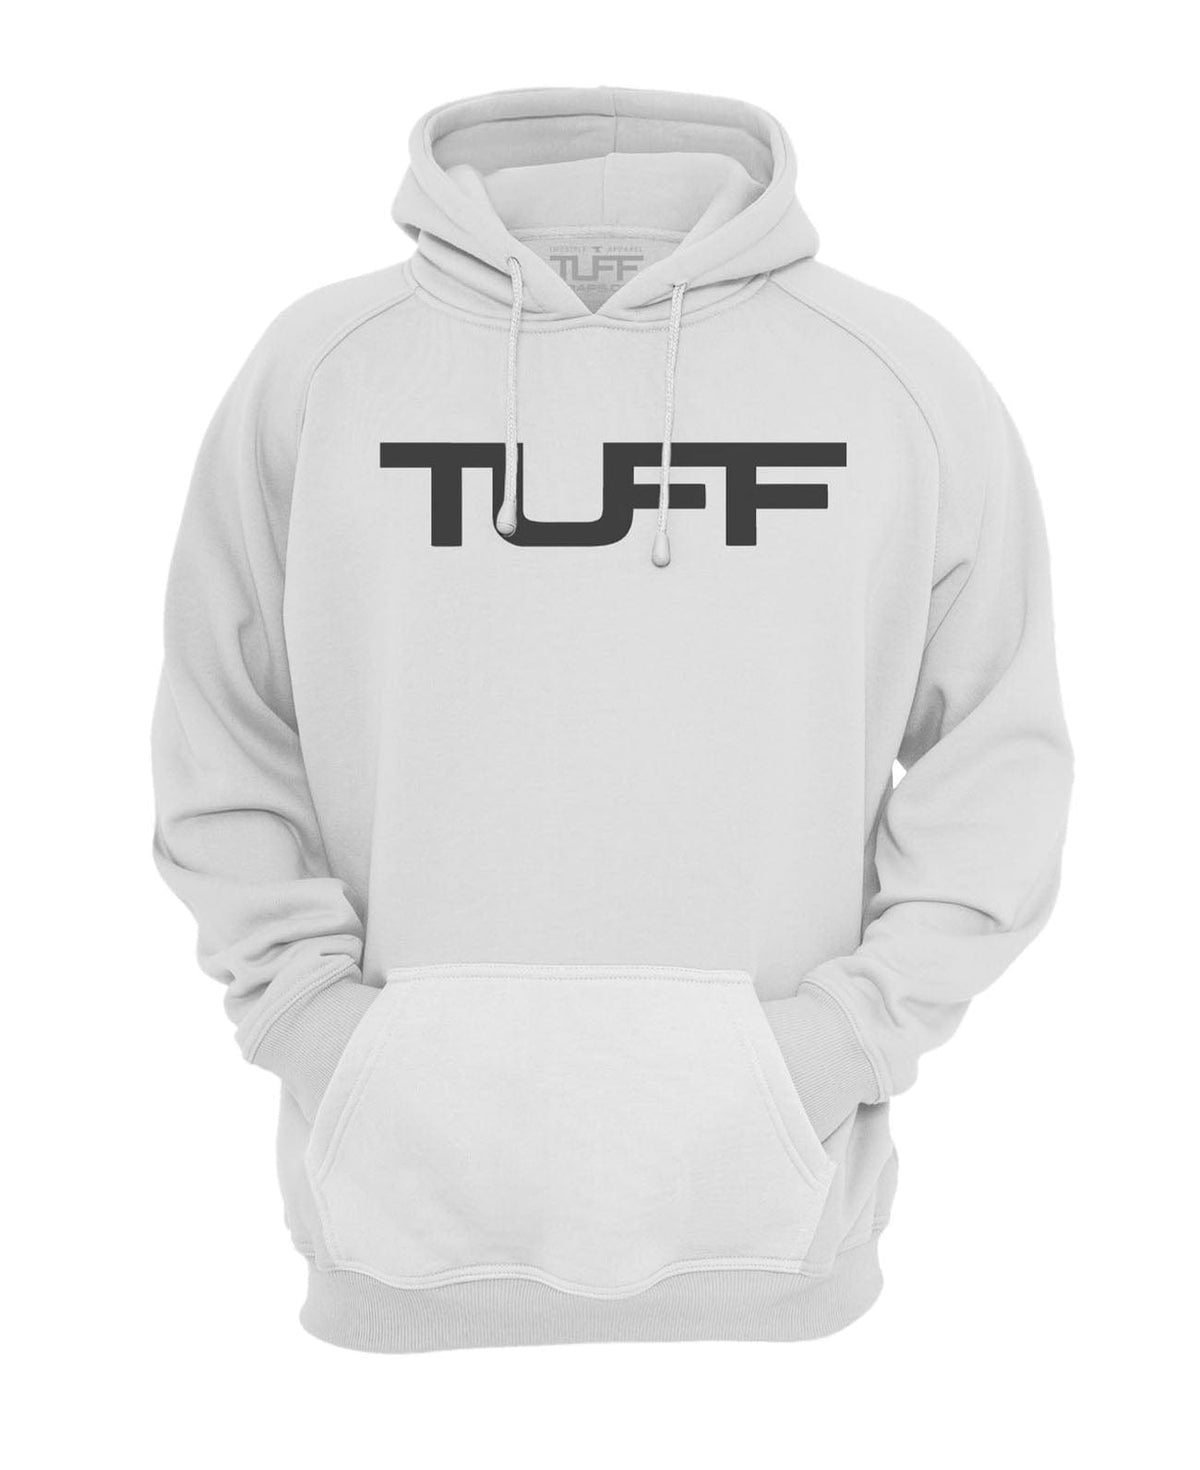 TUFF Apocalyptic Hooded Sweatshirt S / White w/Black TuffWraps.com